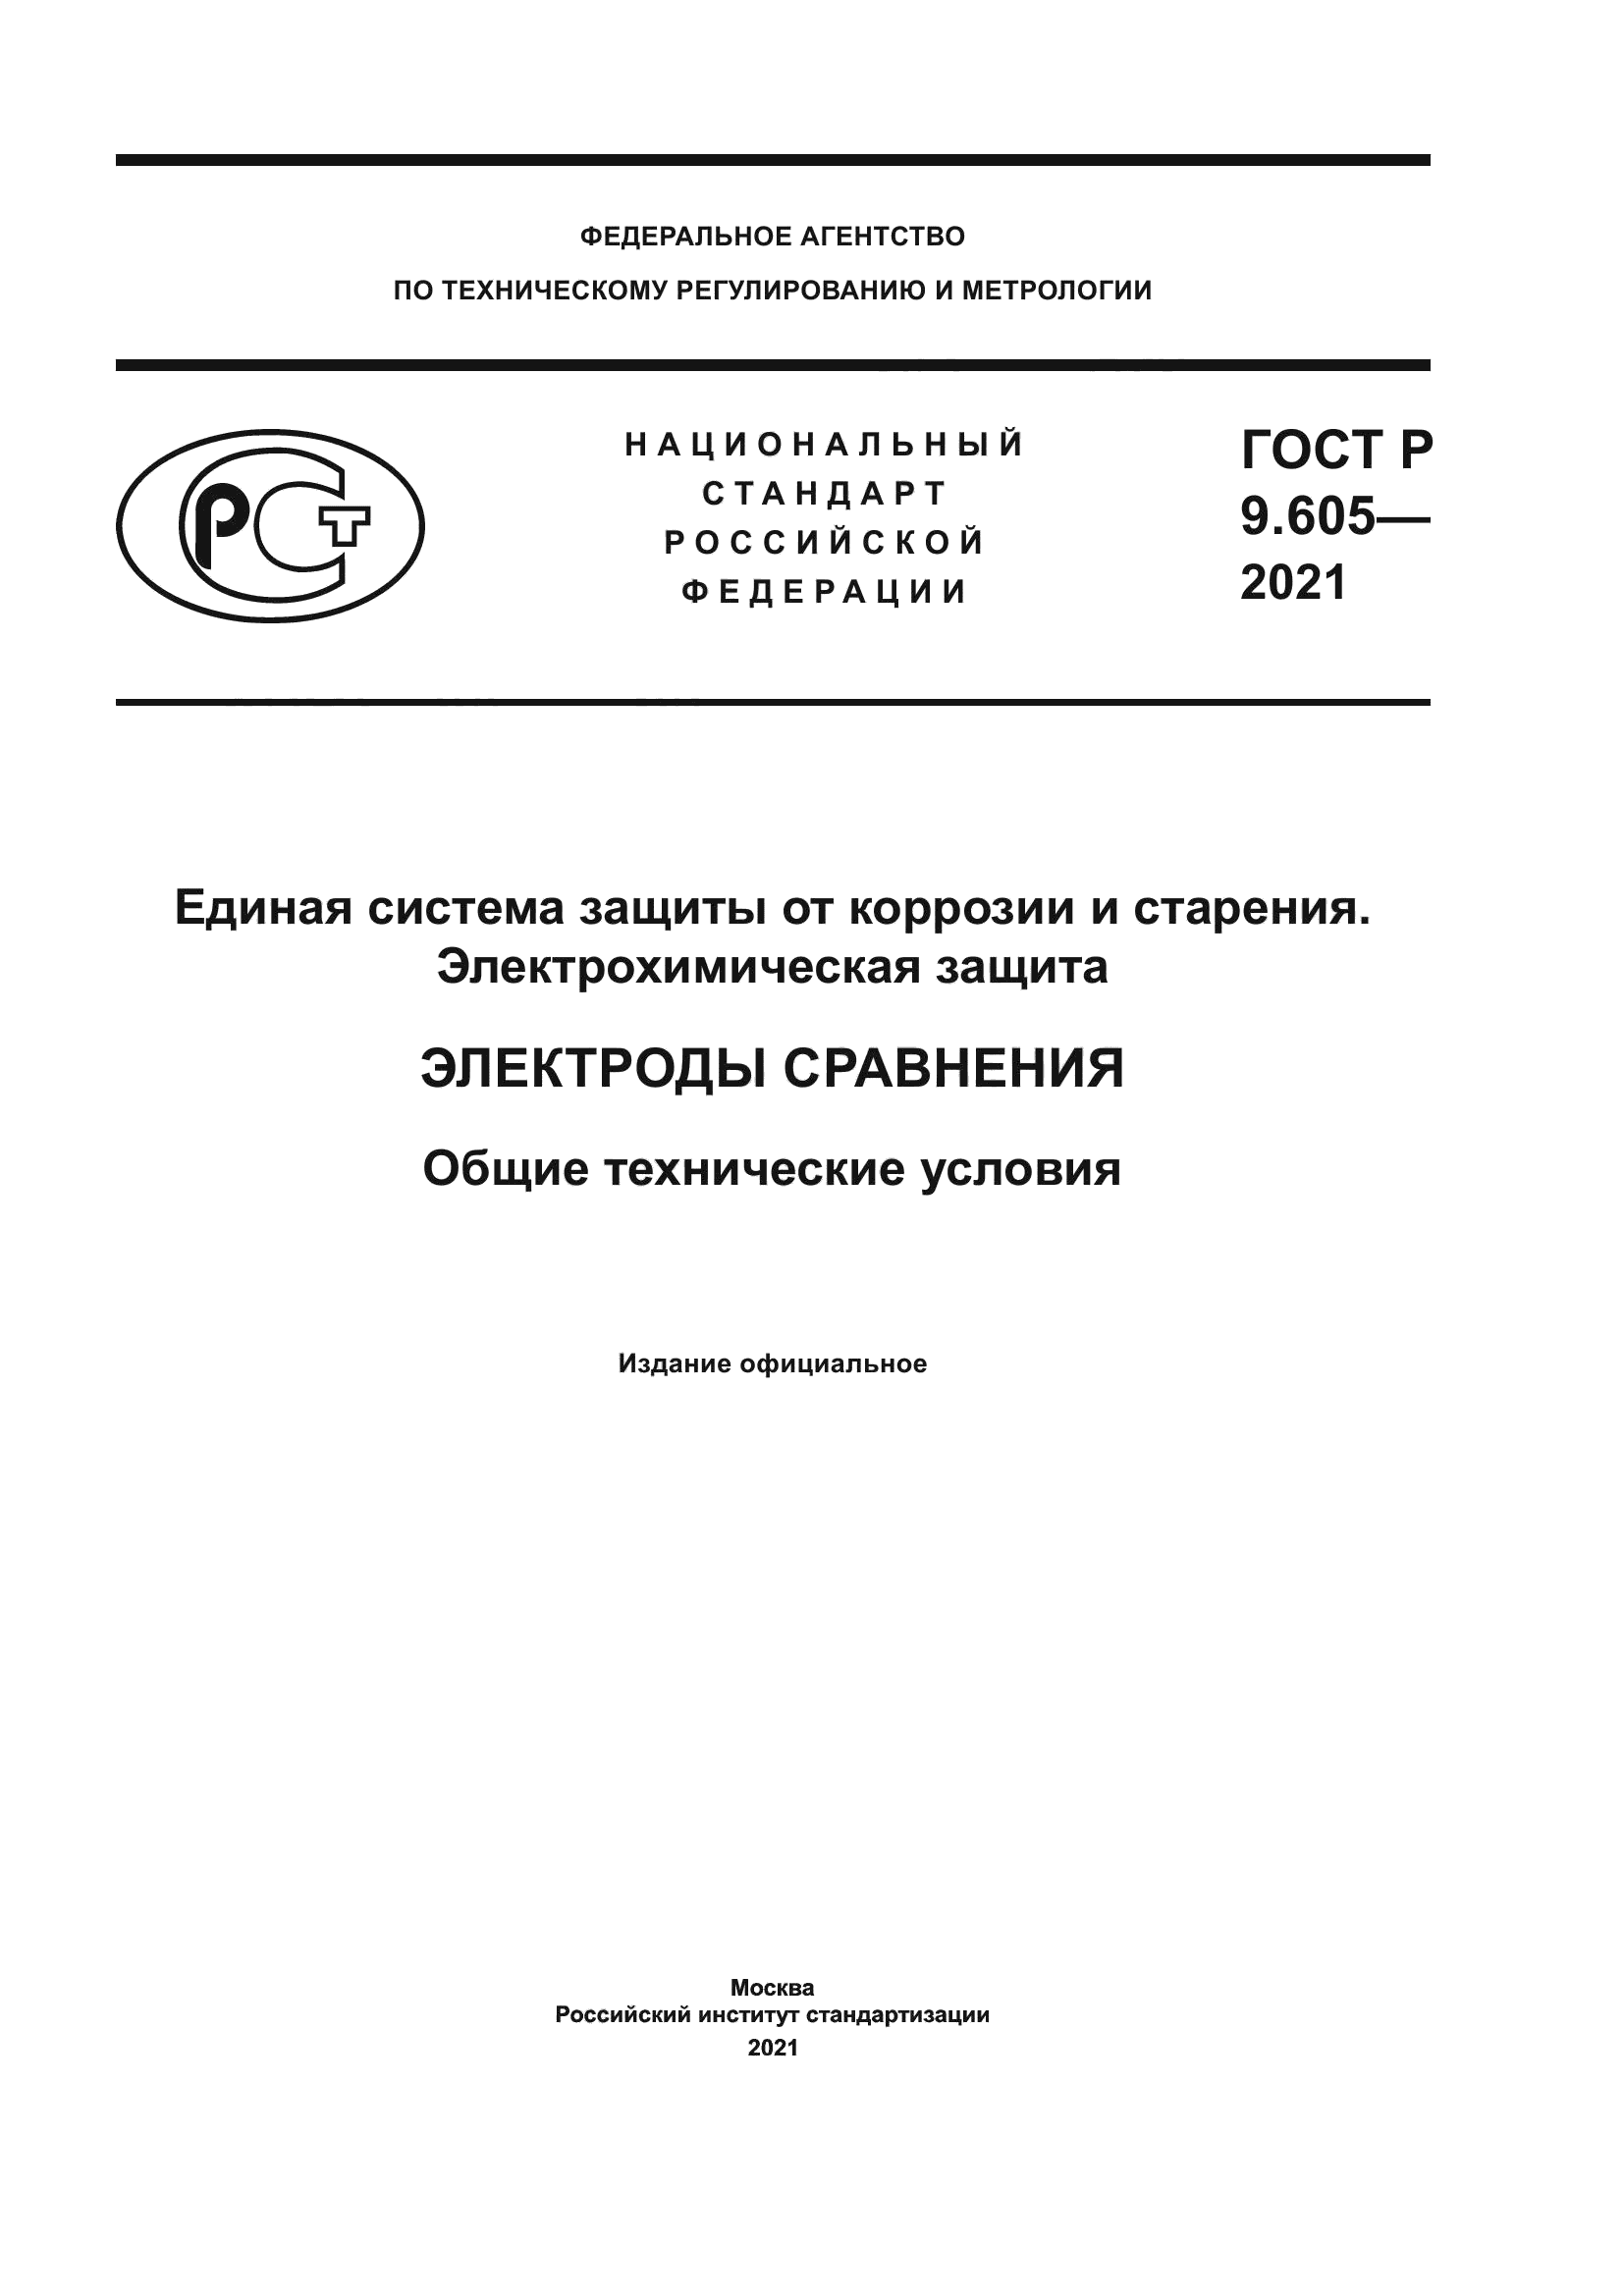 ГОСТ Р 9.605-2021